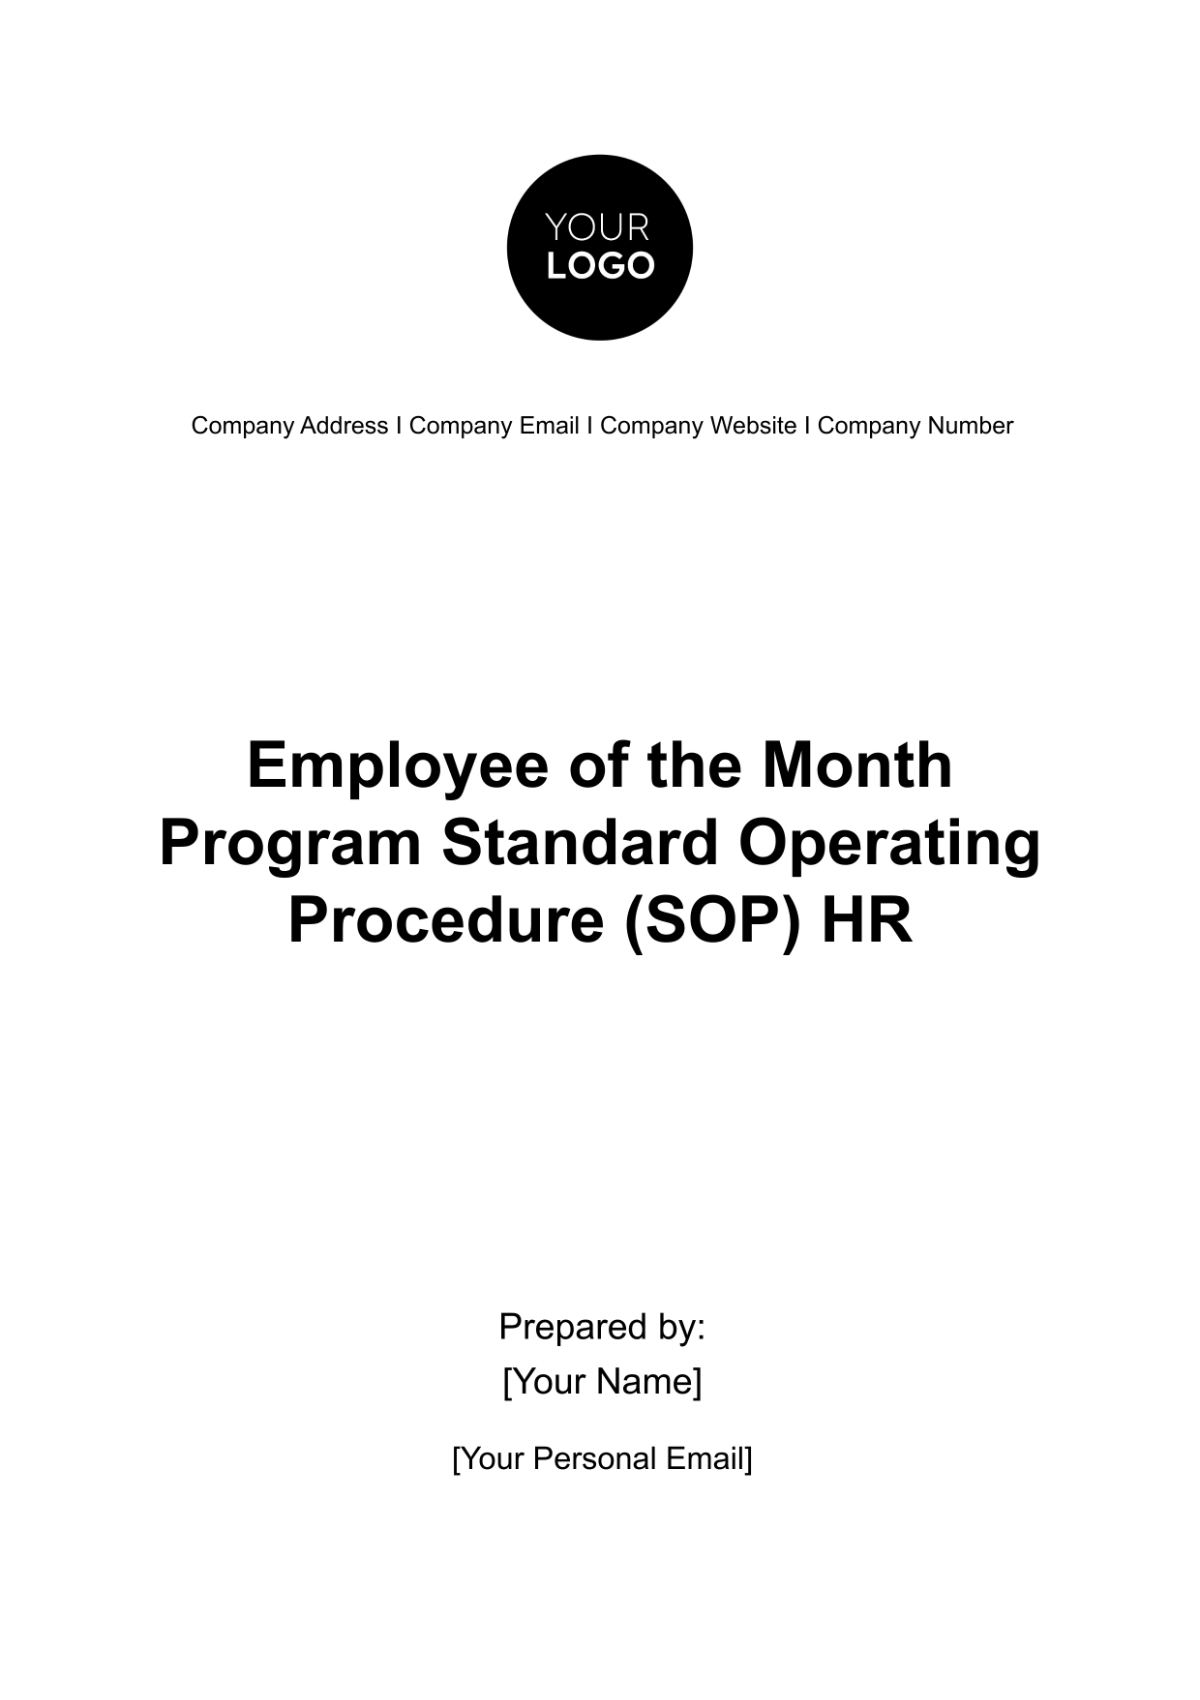 Free Employee of the Month Program Standard Operating Procedure (SOP) HR Template